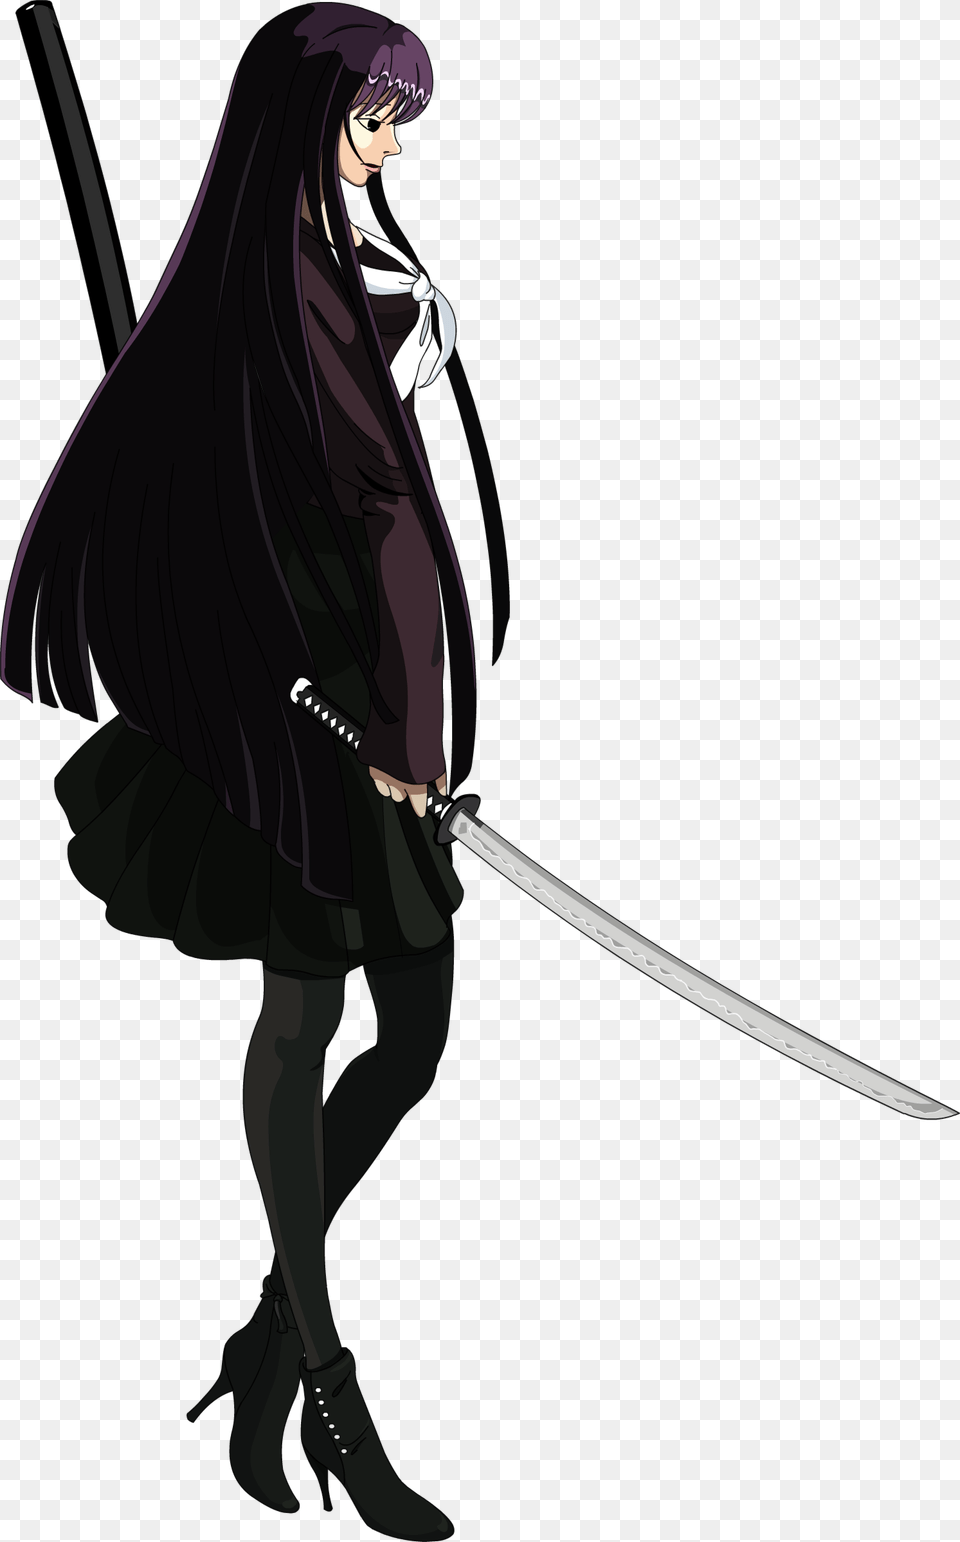 Anime Ninja Schoolgirl Vector Nebula Game Studios, Adult, Weapon, Sword, Person Png Image